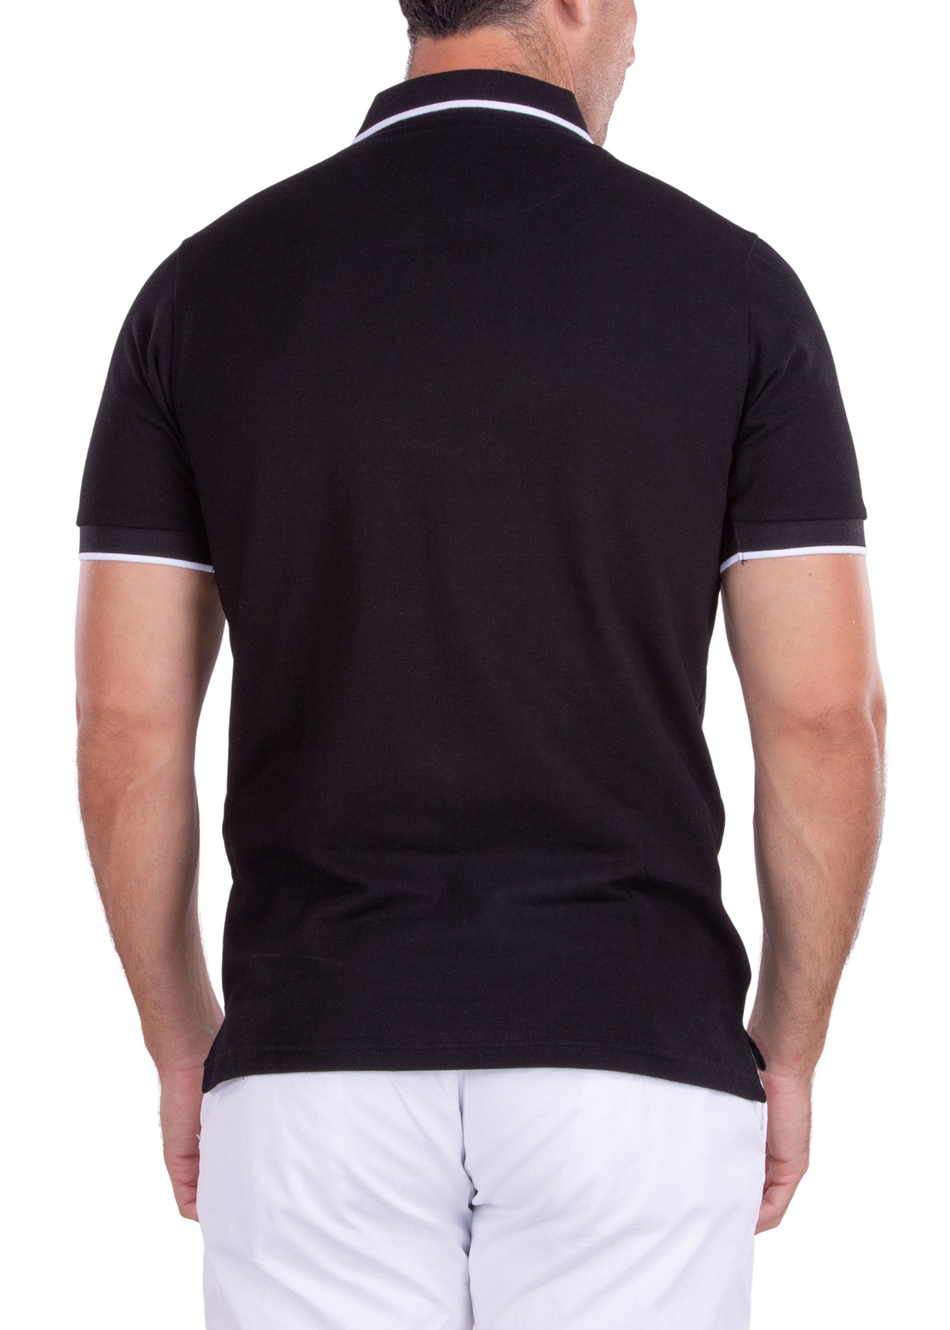 201817P - Black Polo Shirt